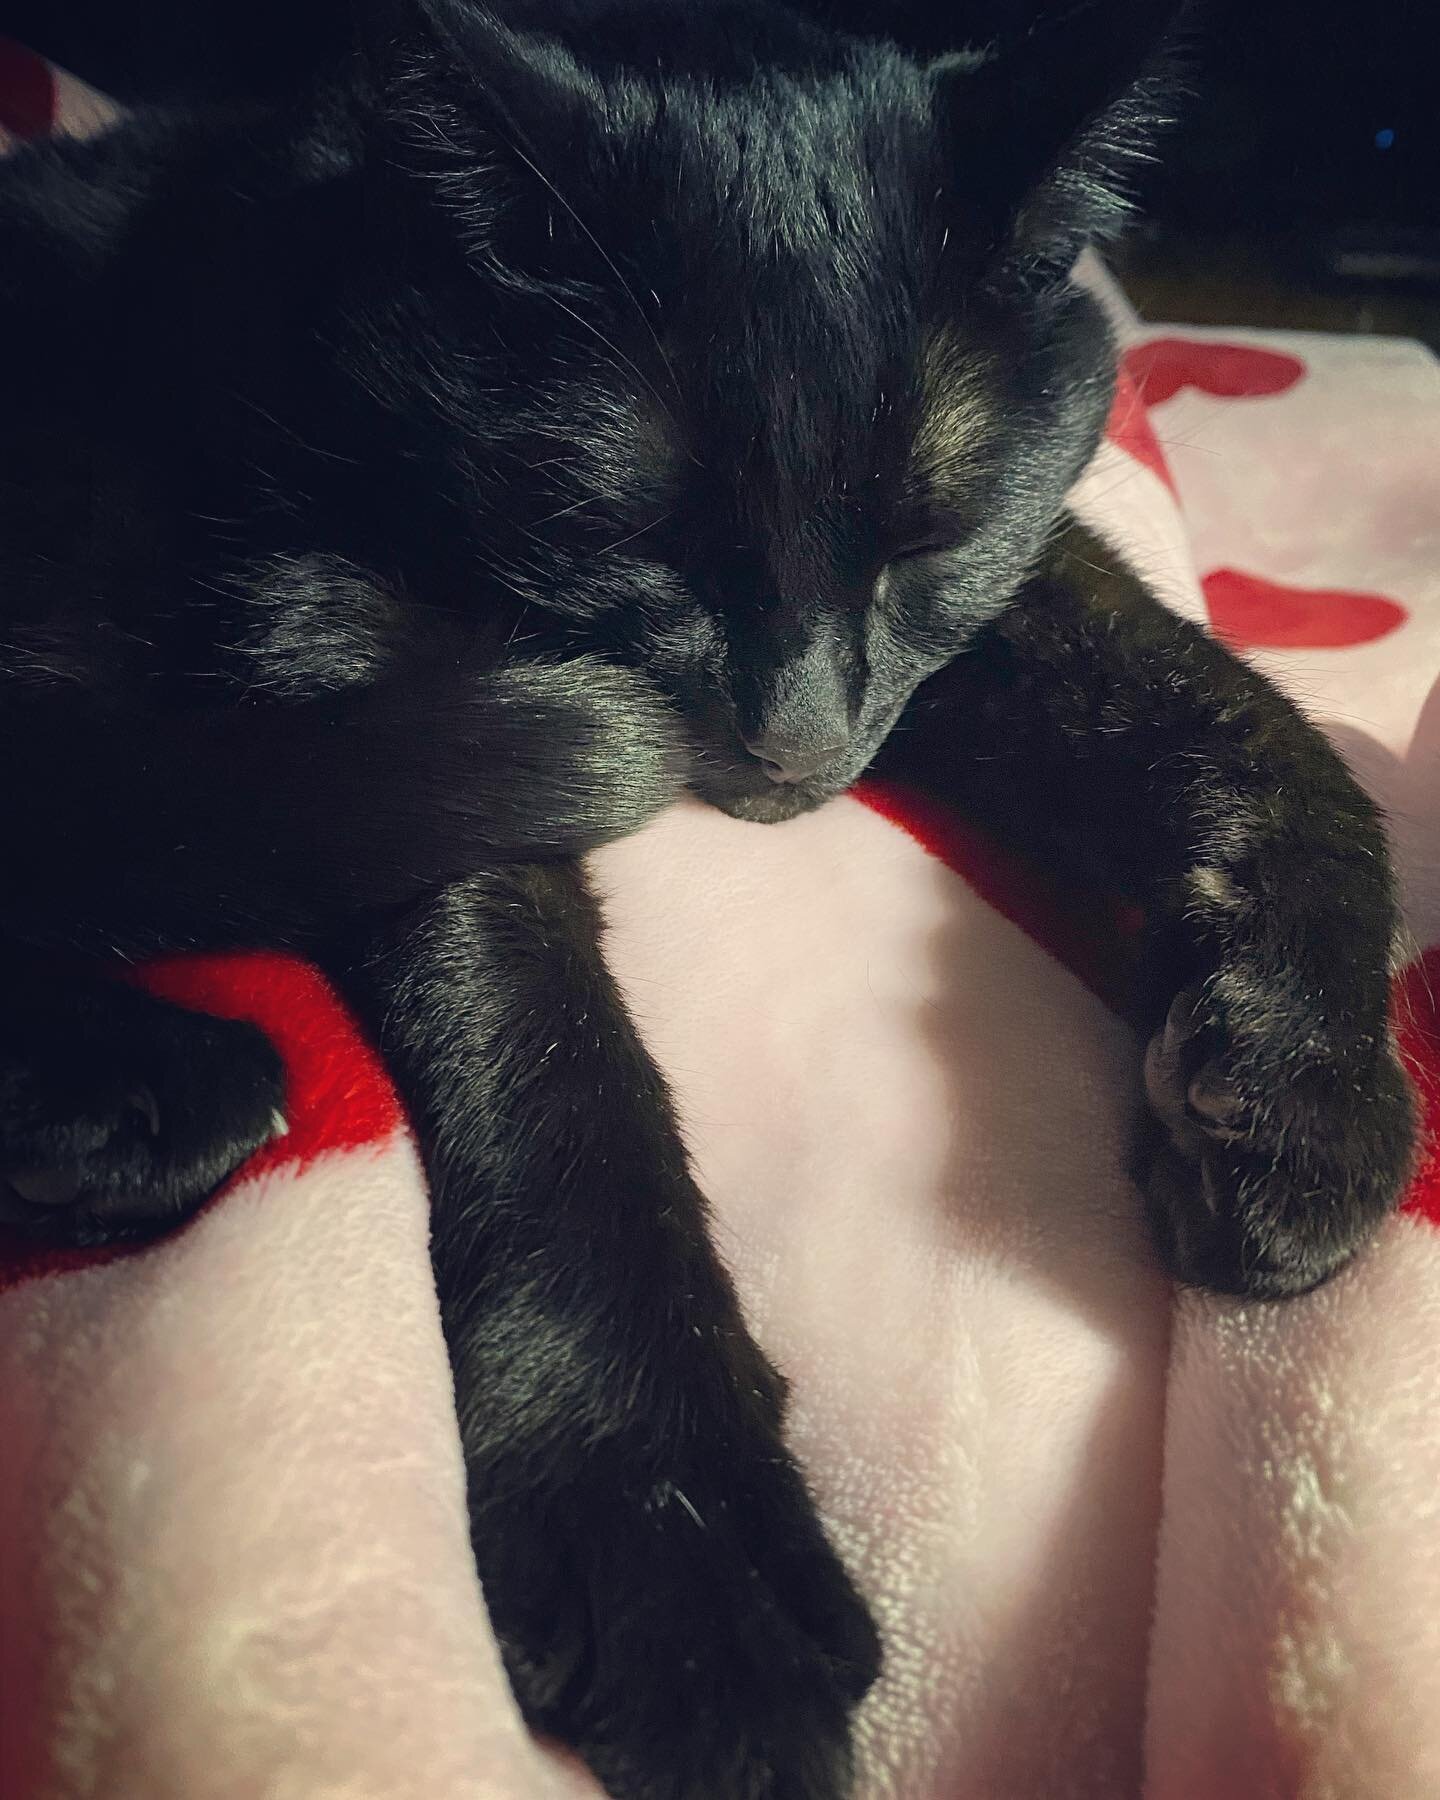 Oliver cuddles always help make things better.
.
.
.
#blackcat #caturday #ptsdsucks